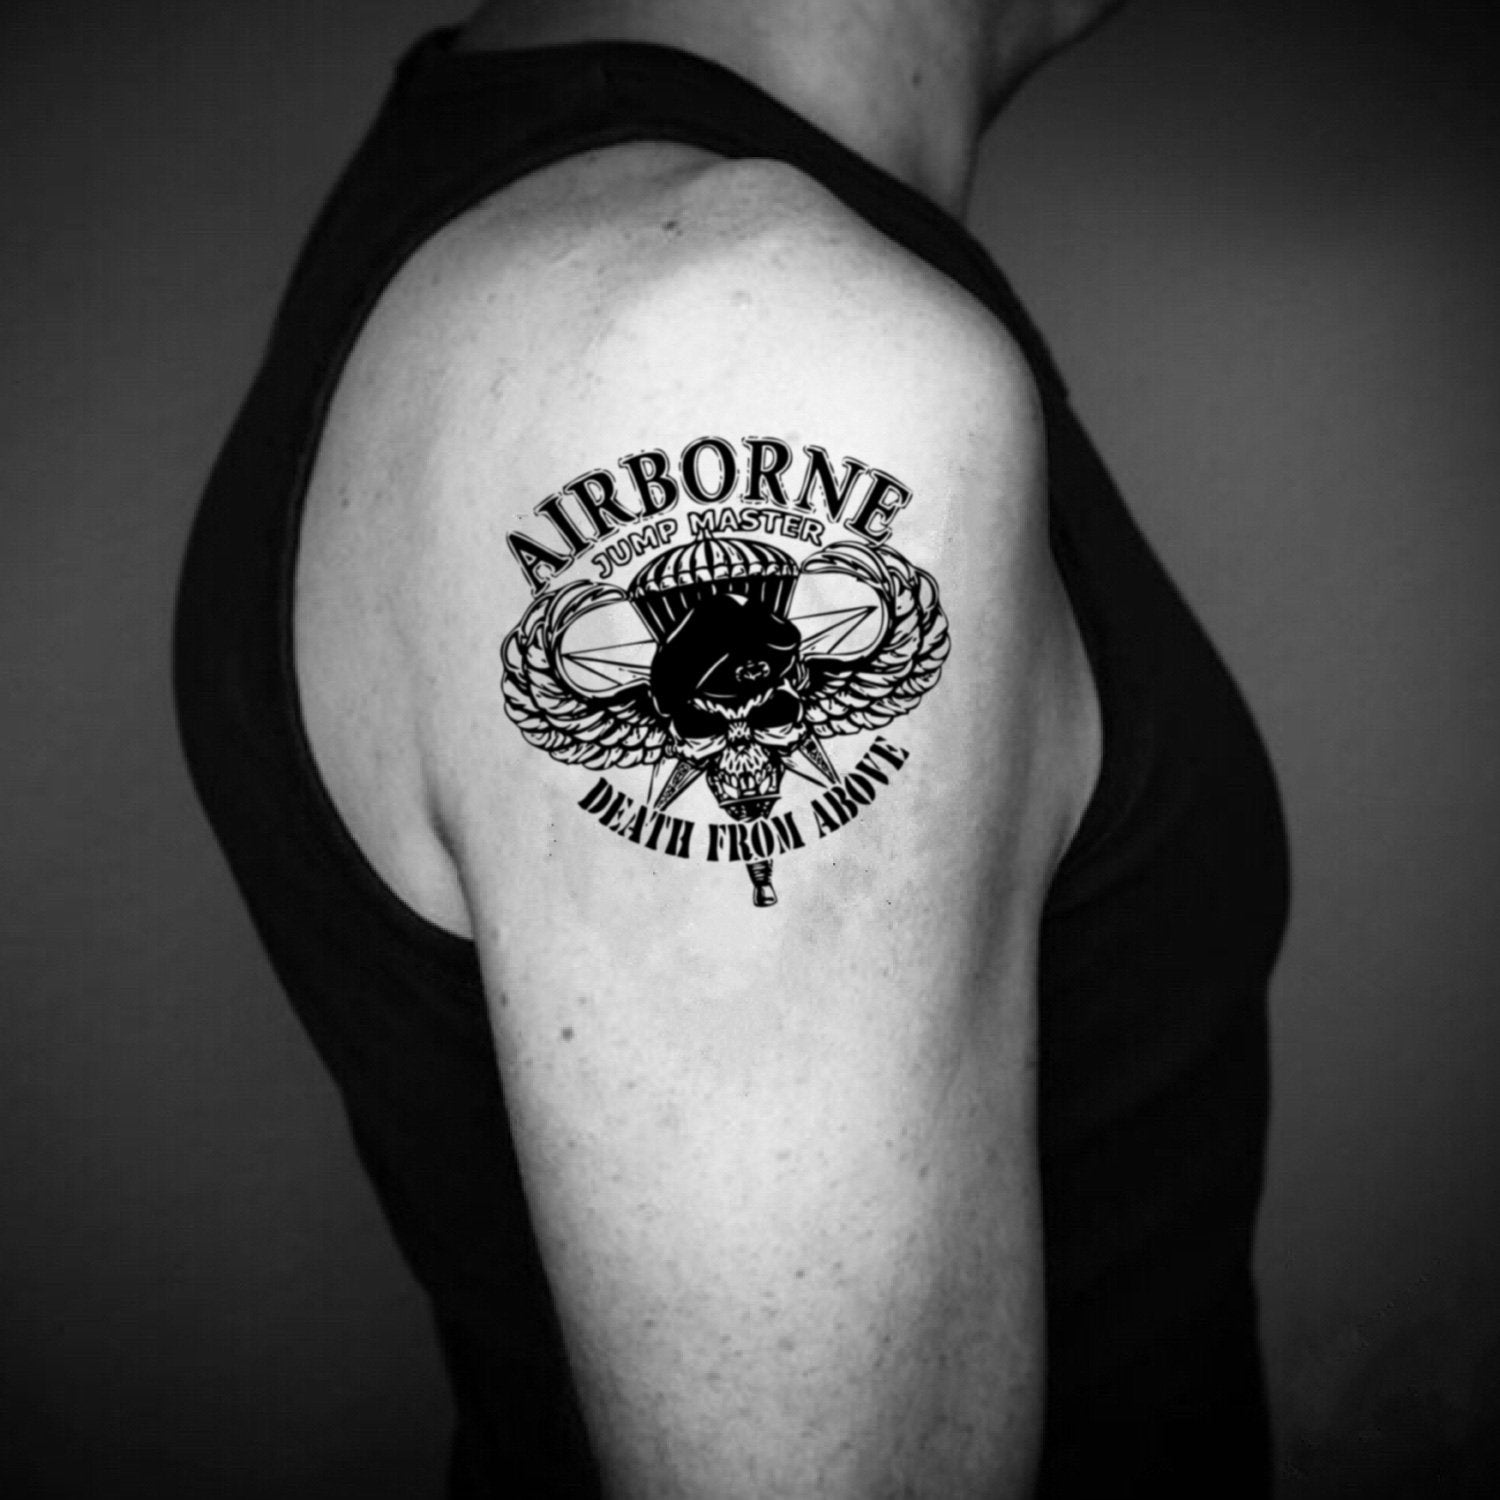 fake medium airborne bicep illustrative temporary tattoo sticker design idea on upper arm